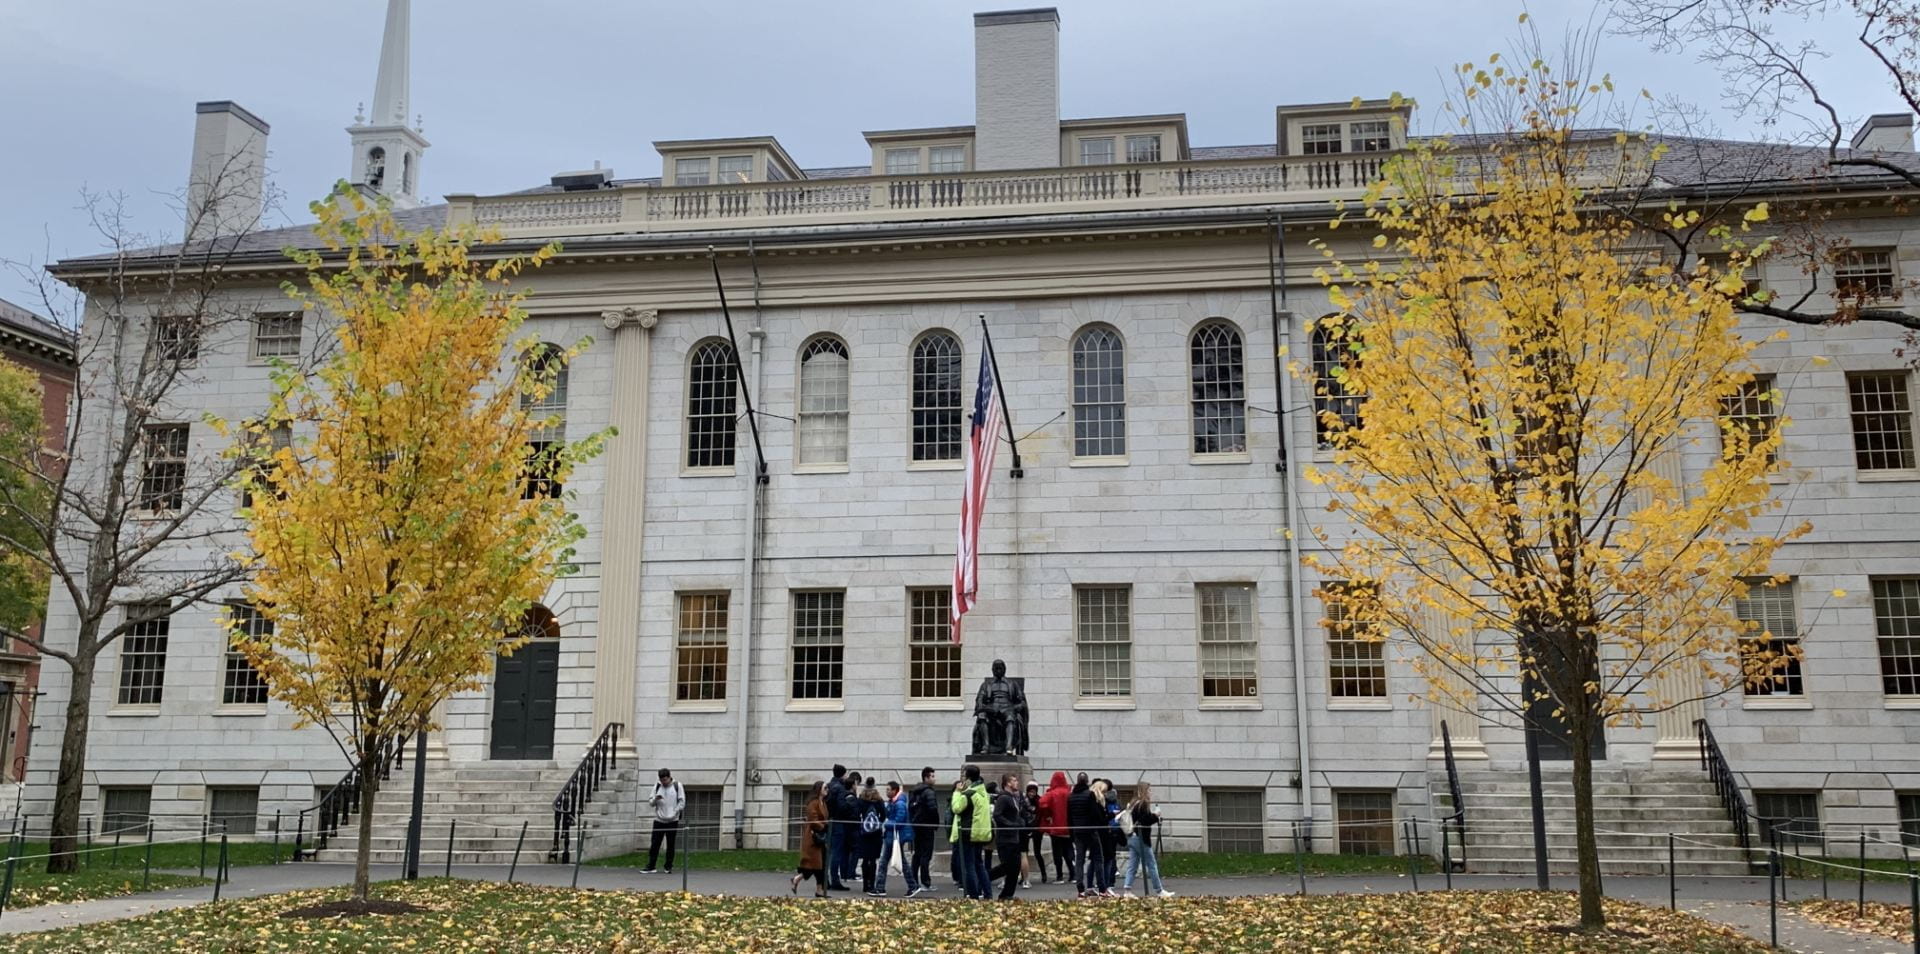 University Hall with people clustered around John Harvard statue